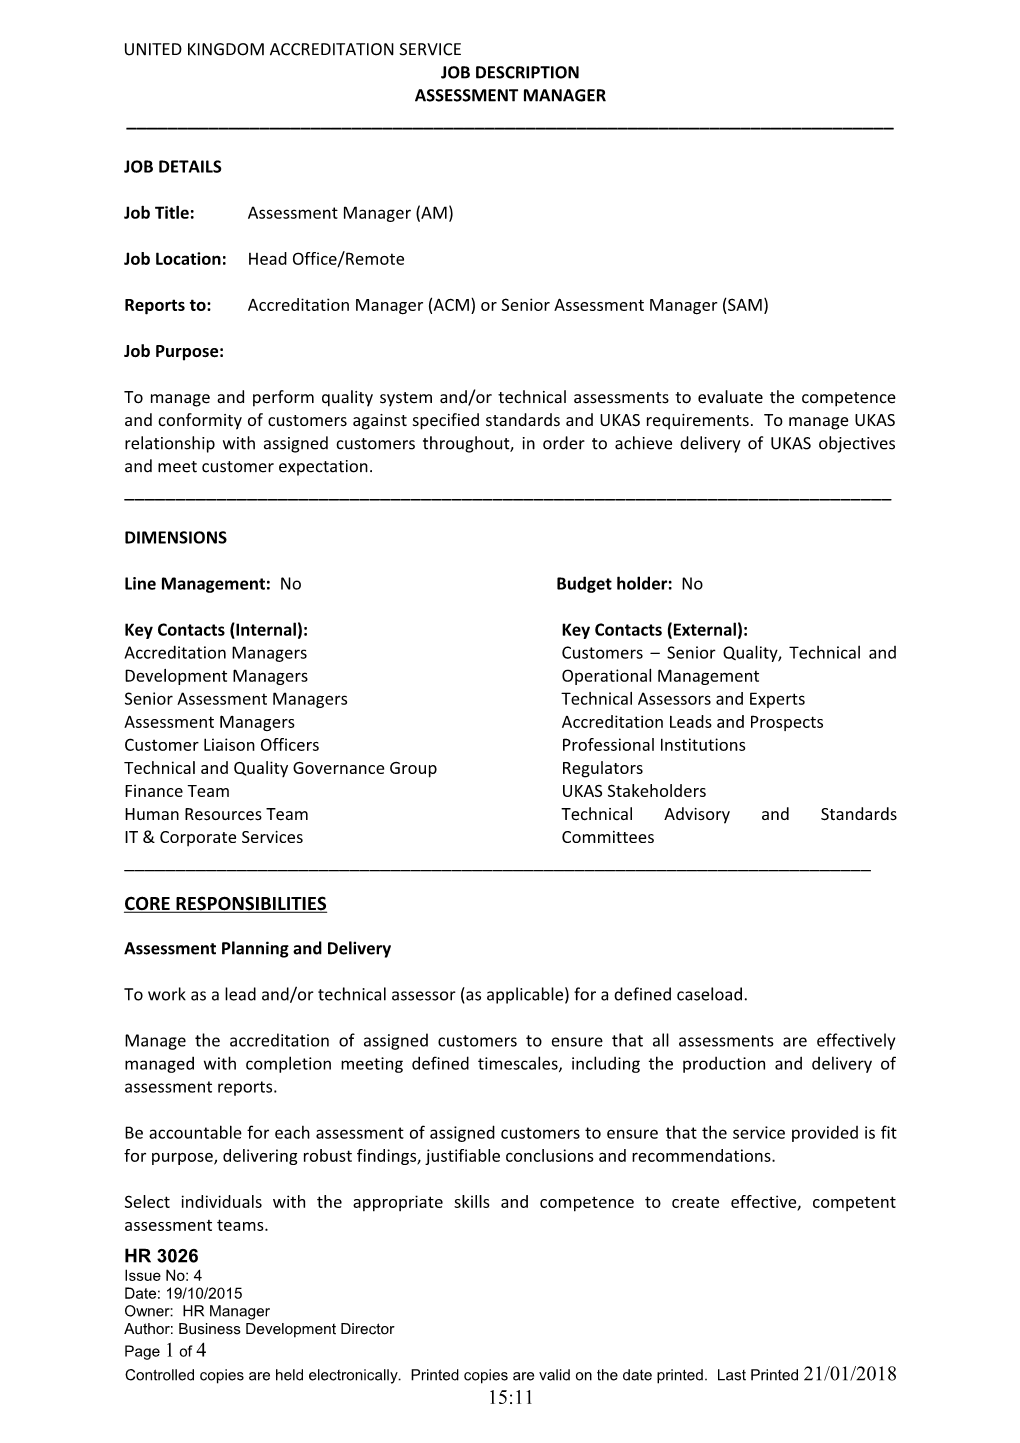 HR 3026 - Assessment Manager Job Description